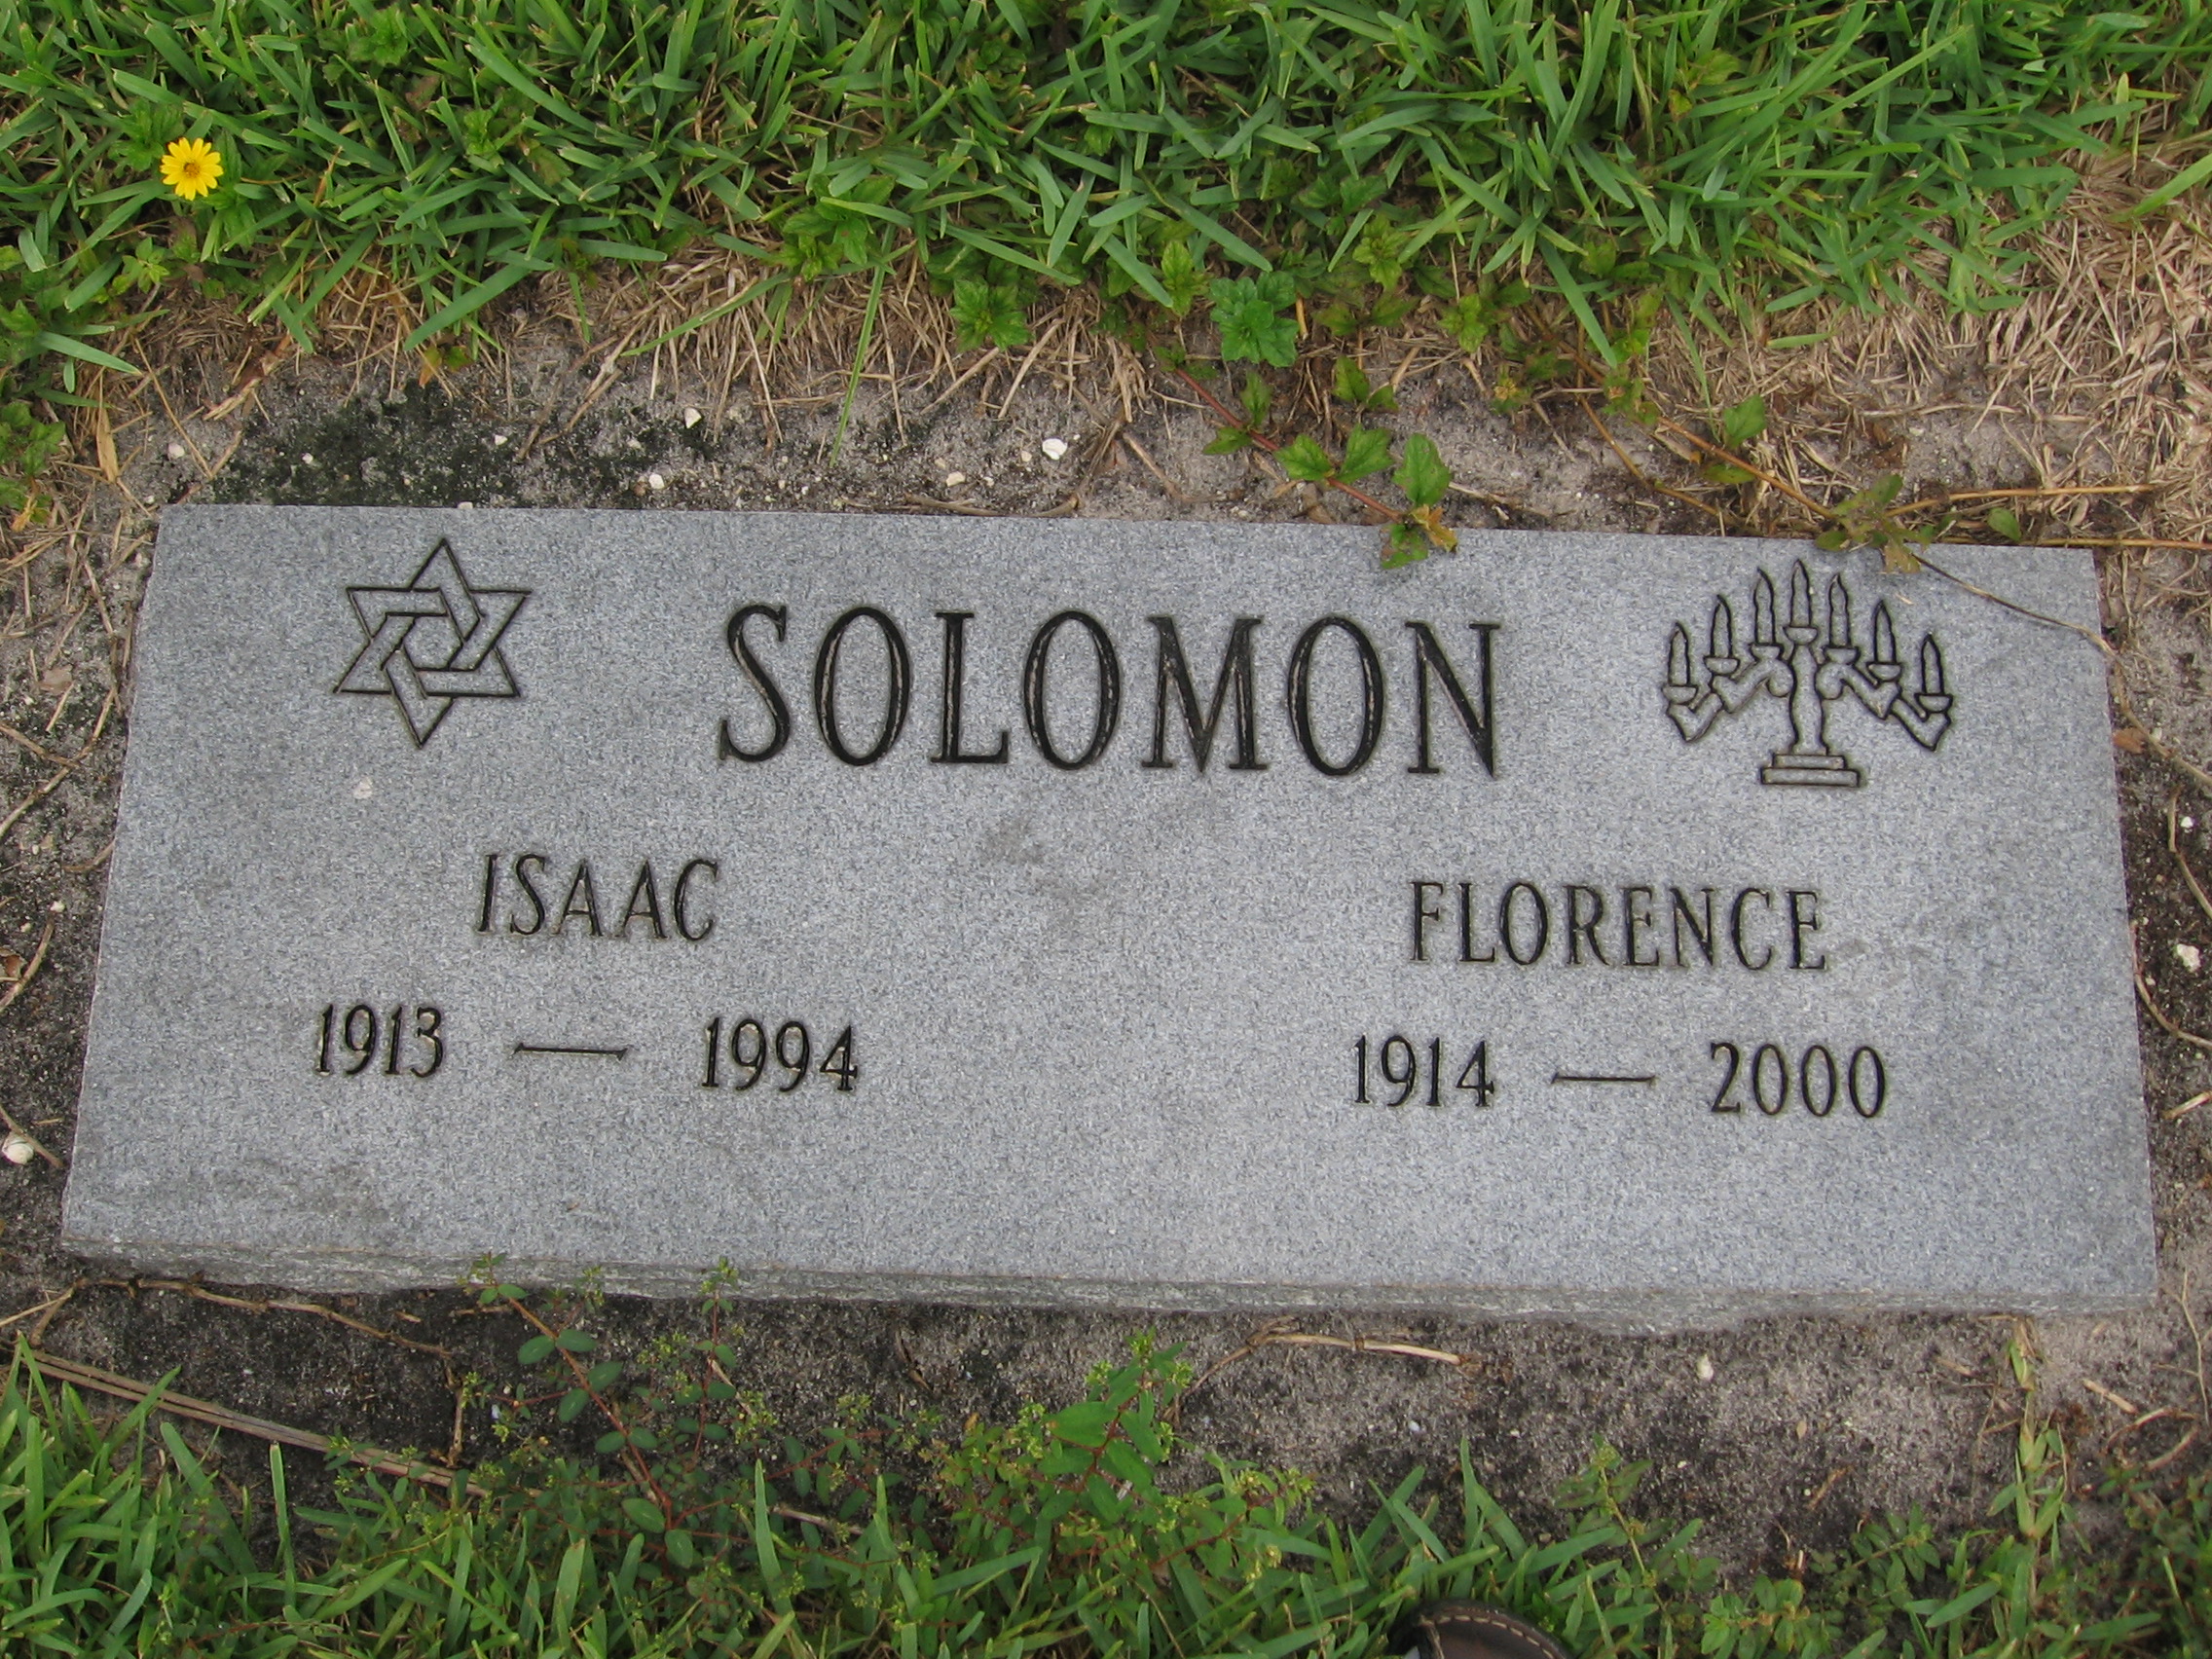 Florence Solomon